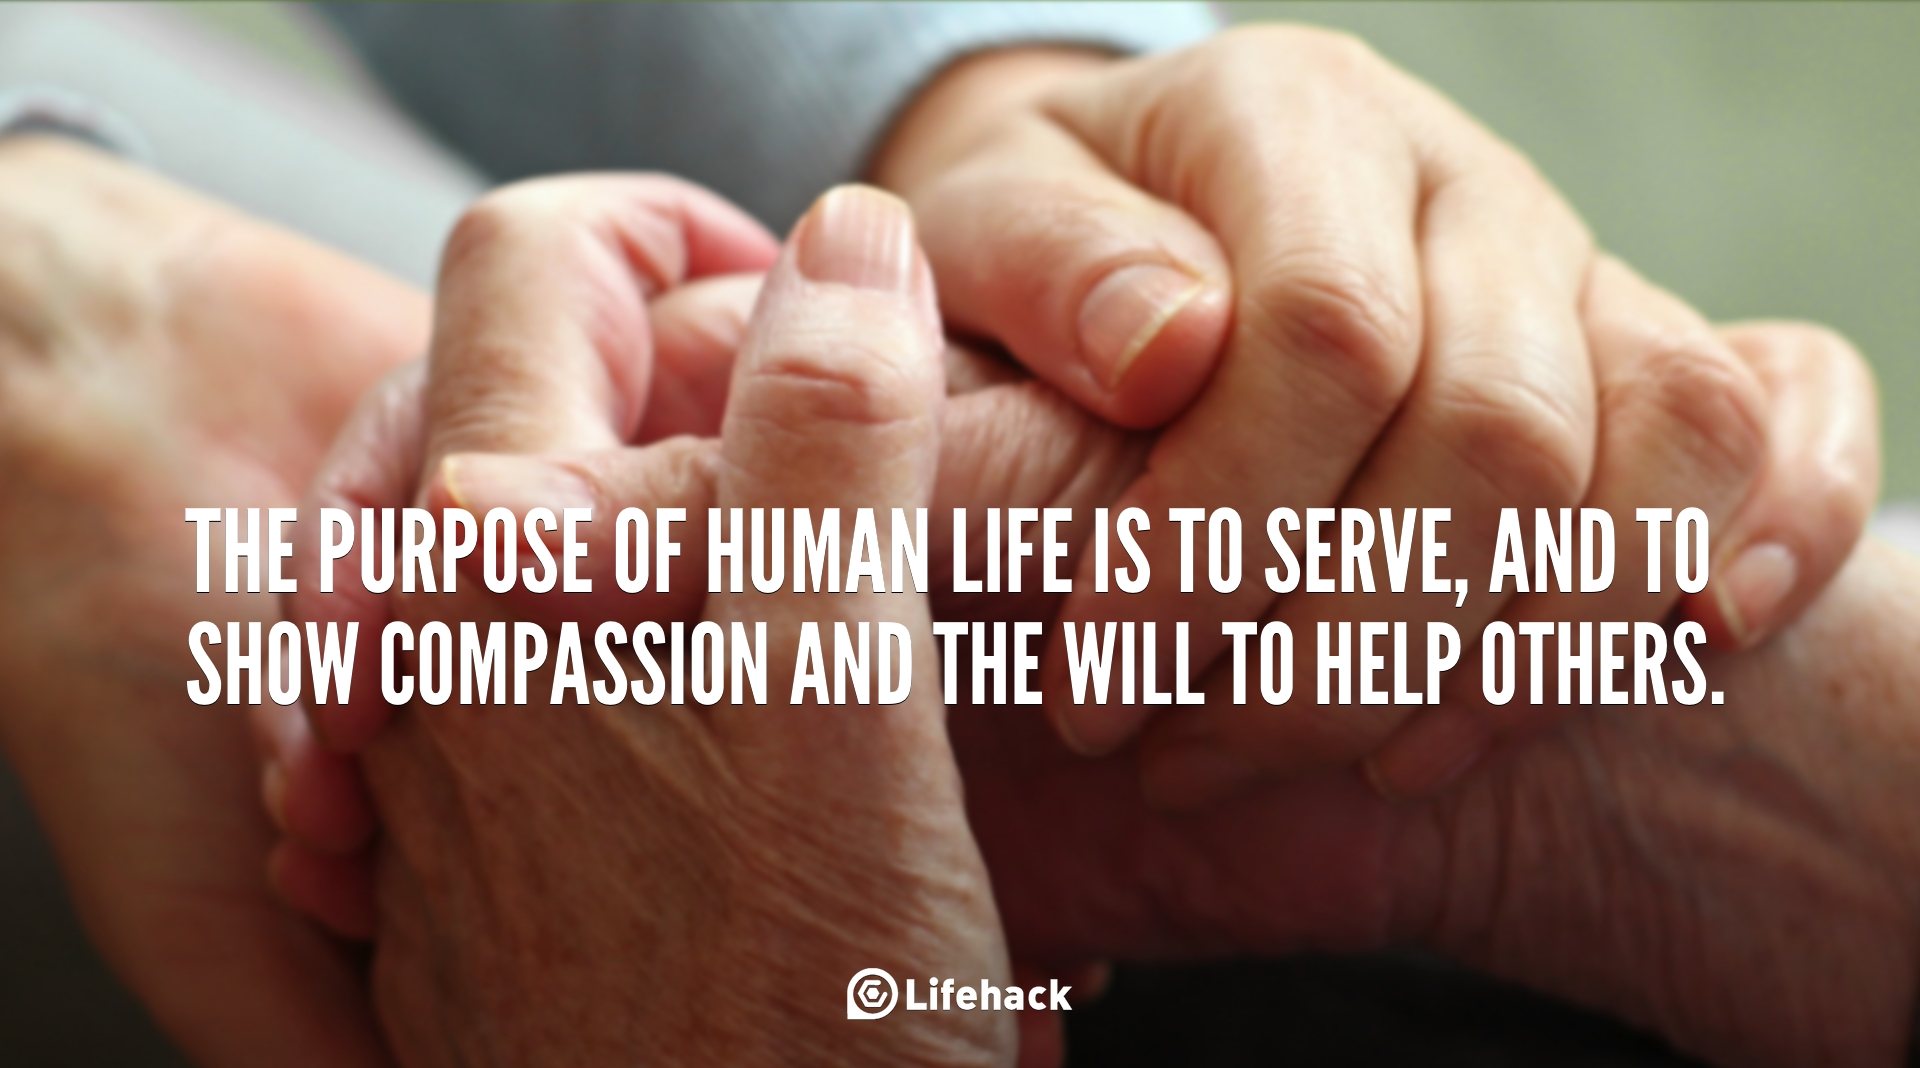 30sec Tip: The Purpose of Human Life